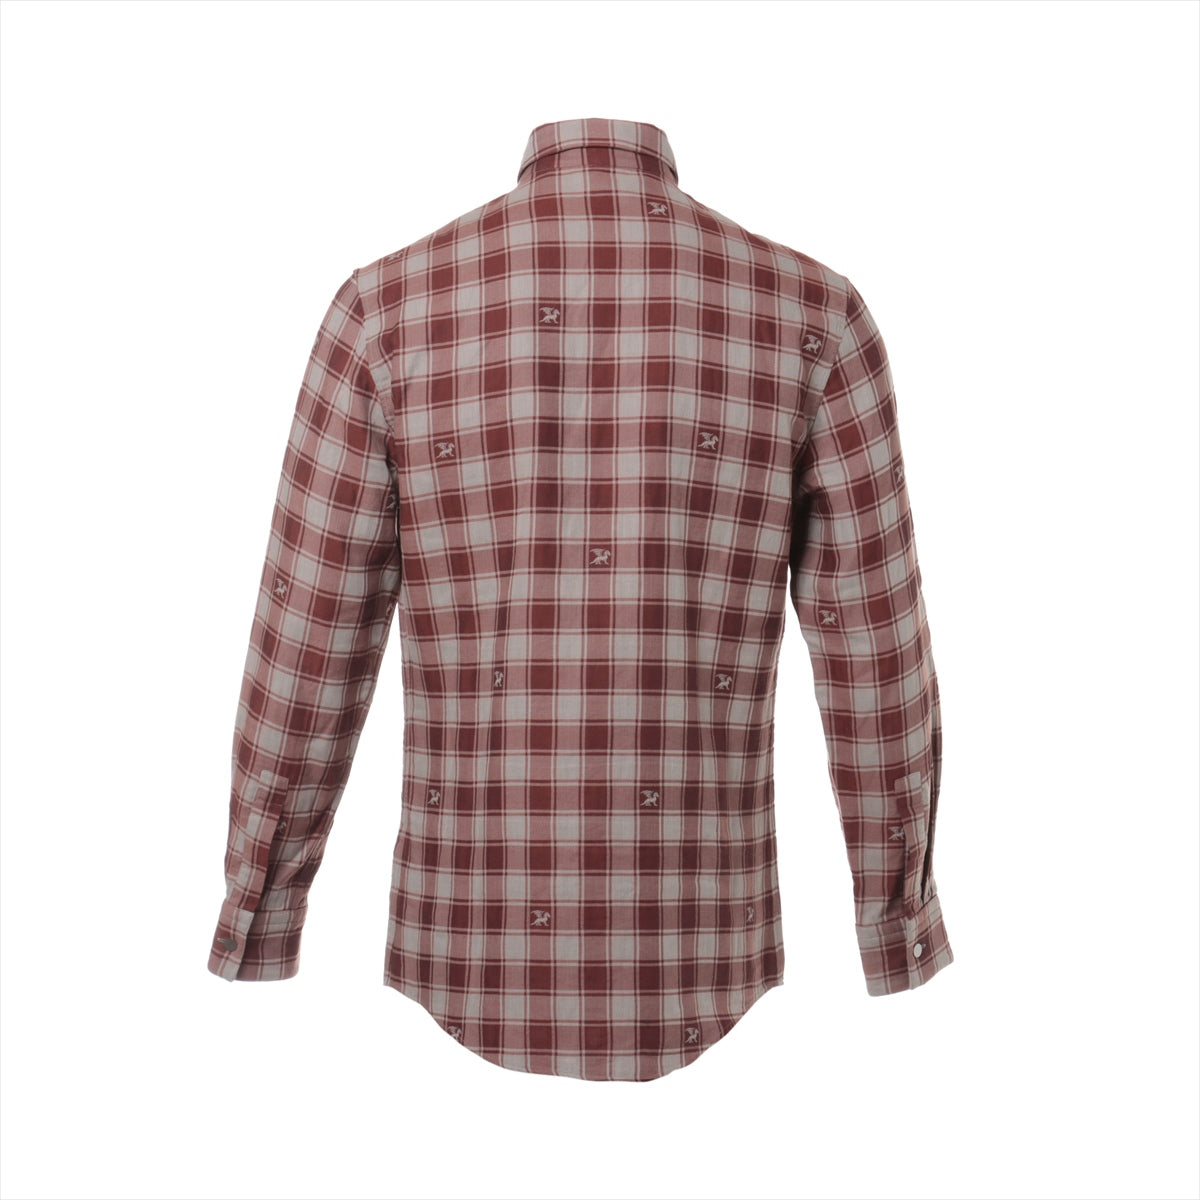 Hermès Cotton Shirt 38 Men's Gray x brown